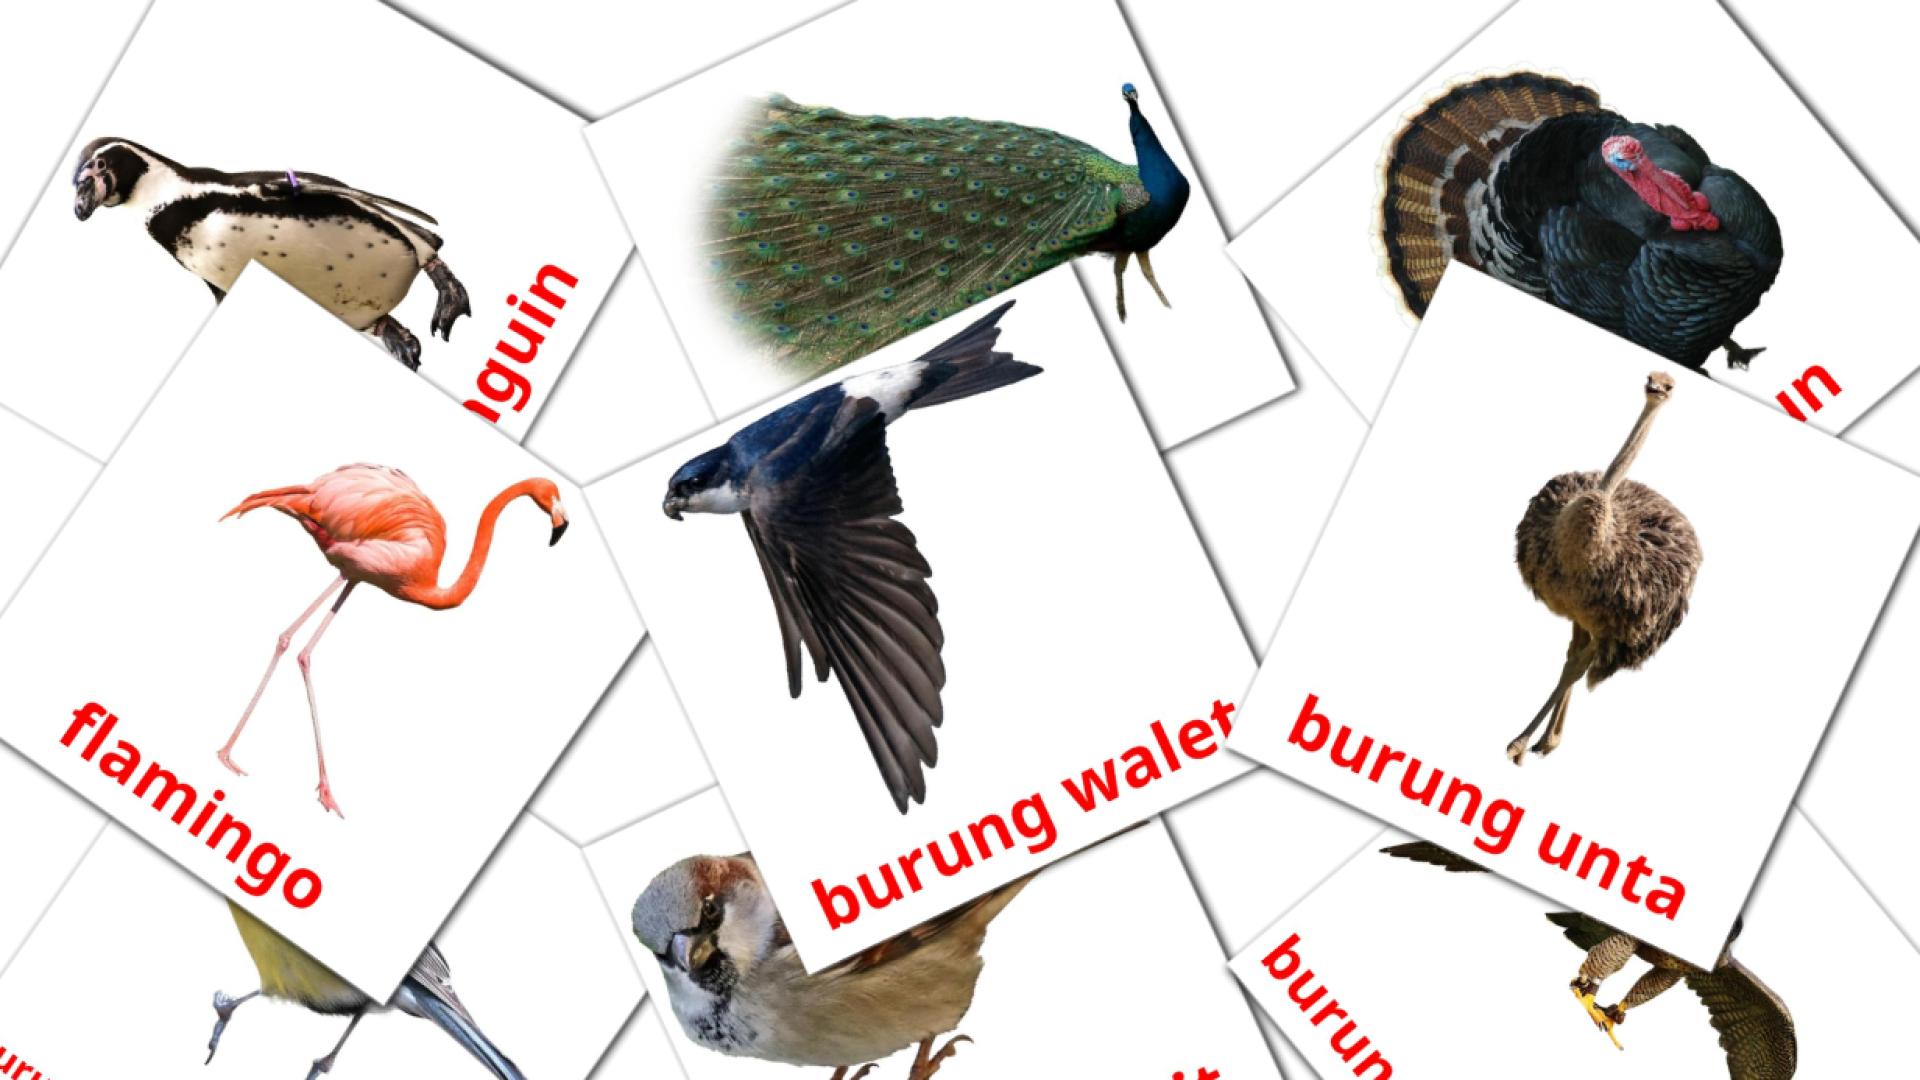 Indonesisch Burunge Vokabelkarteikarten